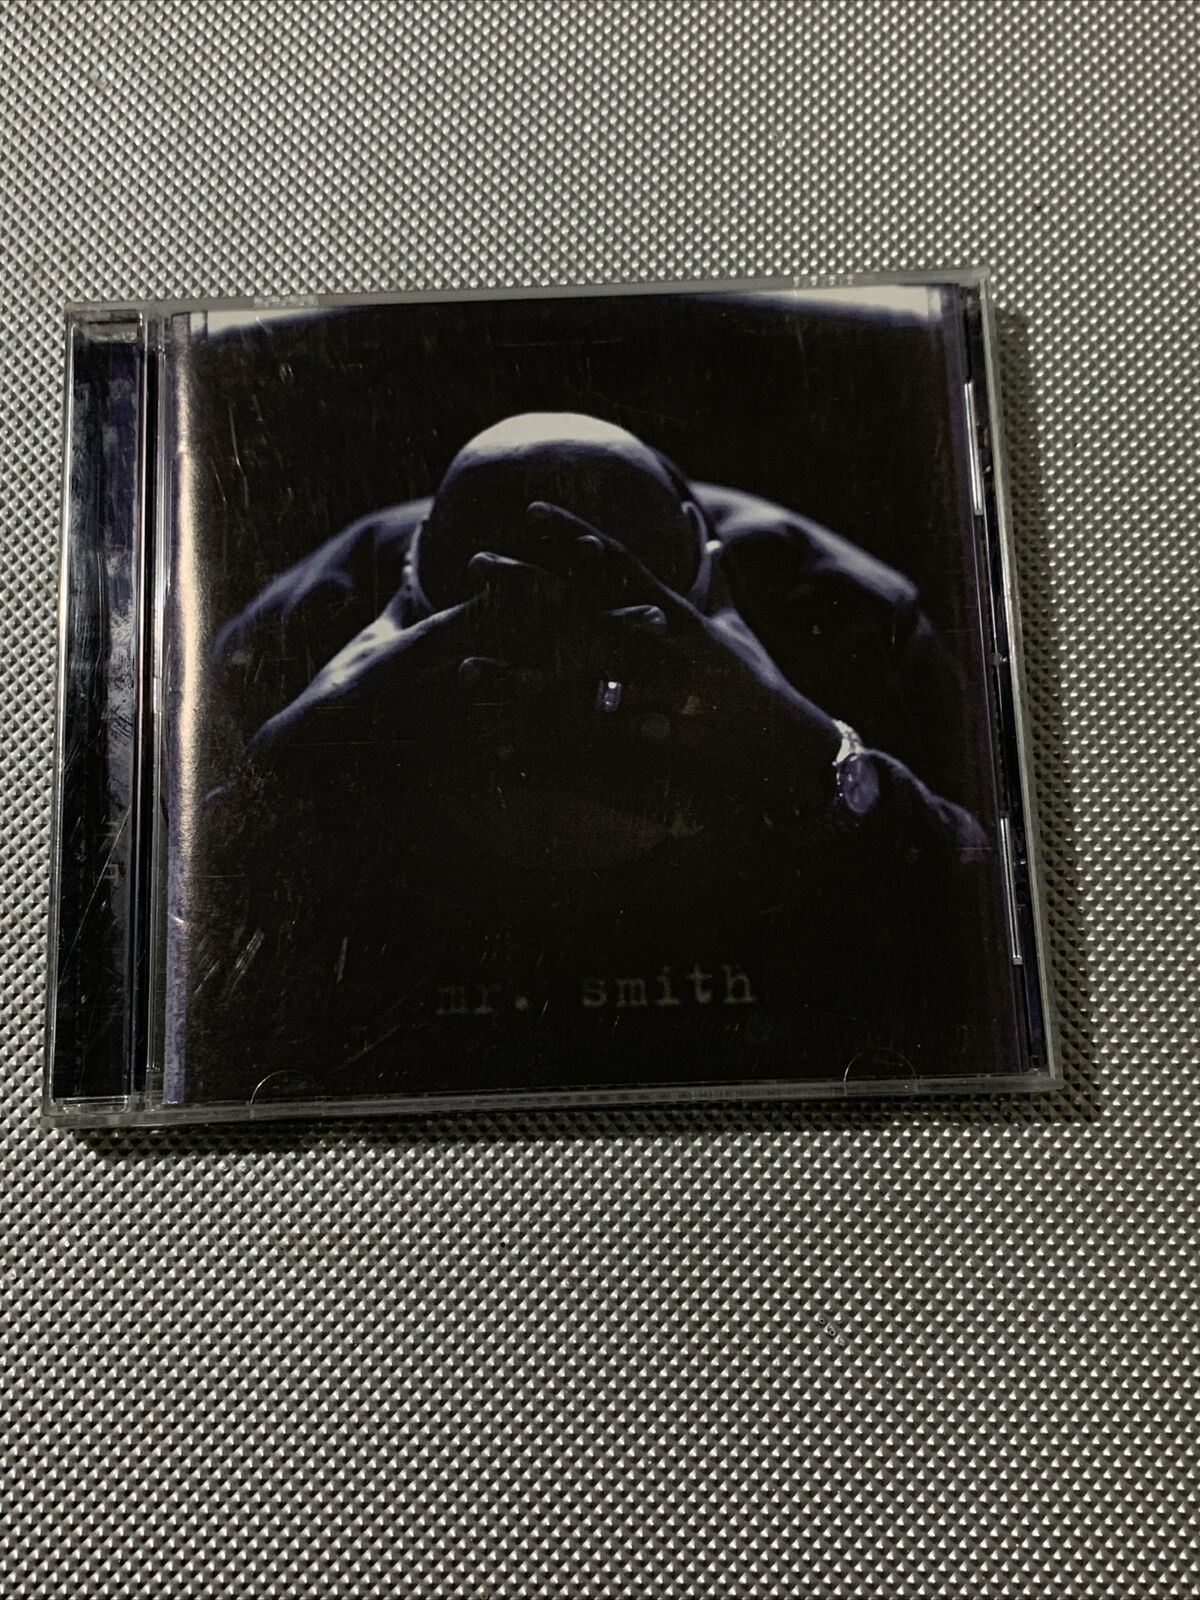 LL Cool J “Mr. Smith” CLEAN EDITED Mobb Deep Fat Joe ‘Doin It’ ‘I Shot Ya’